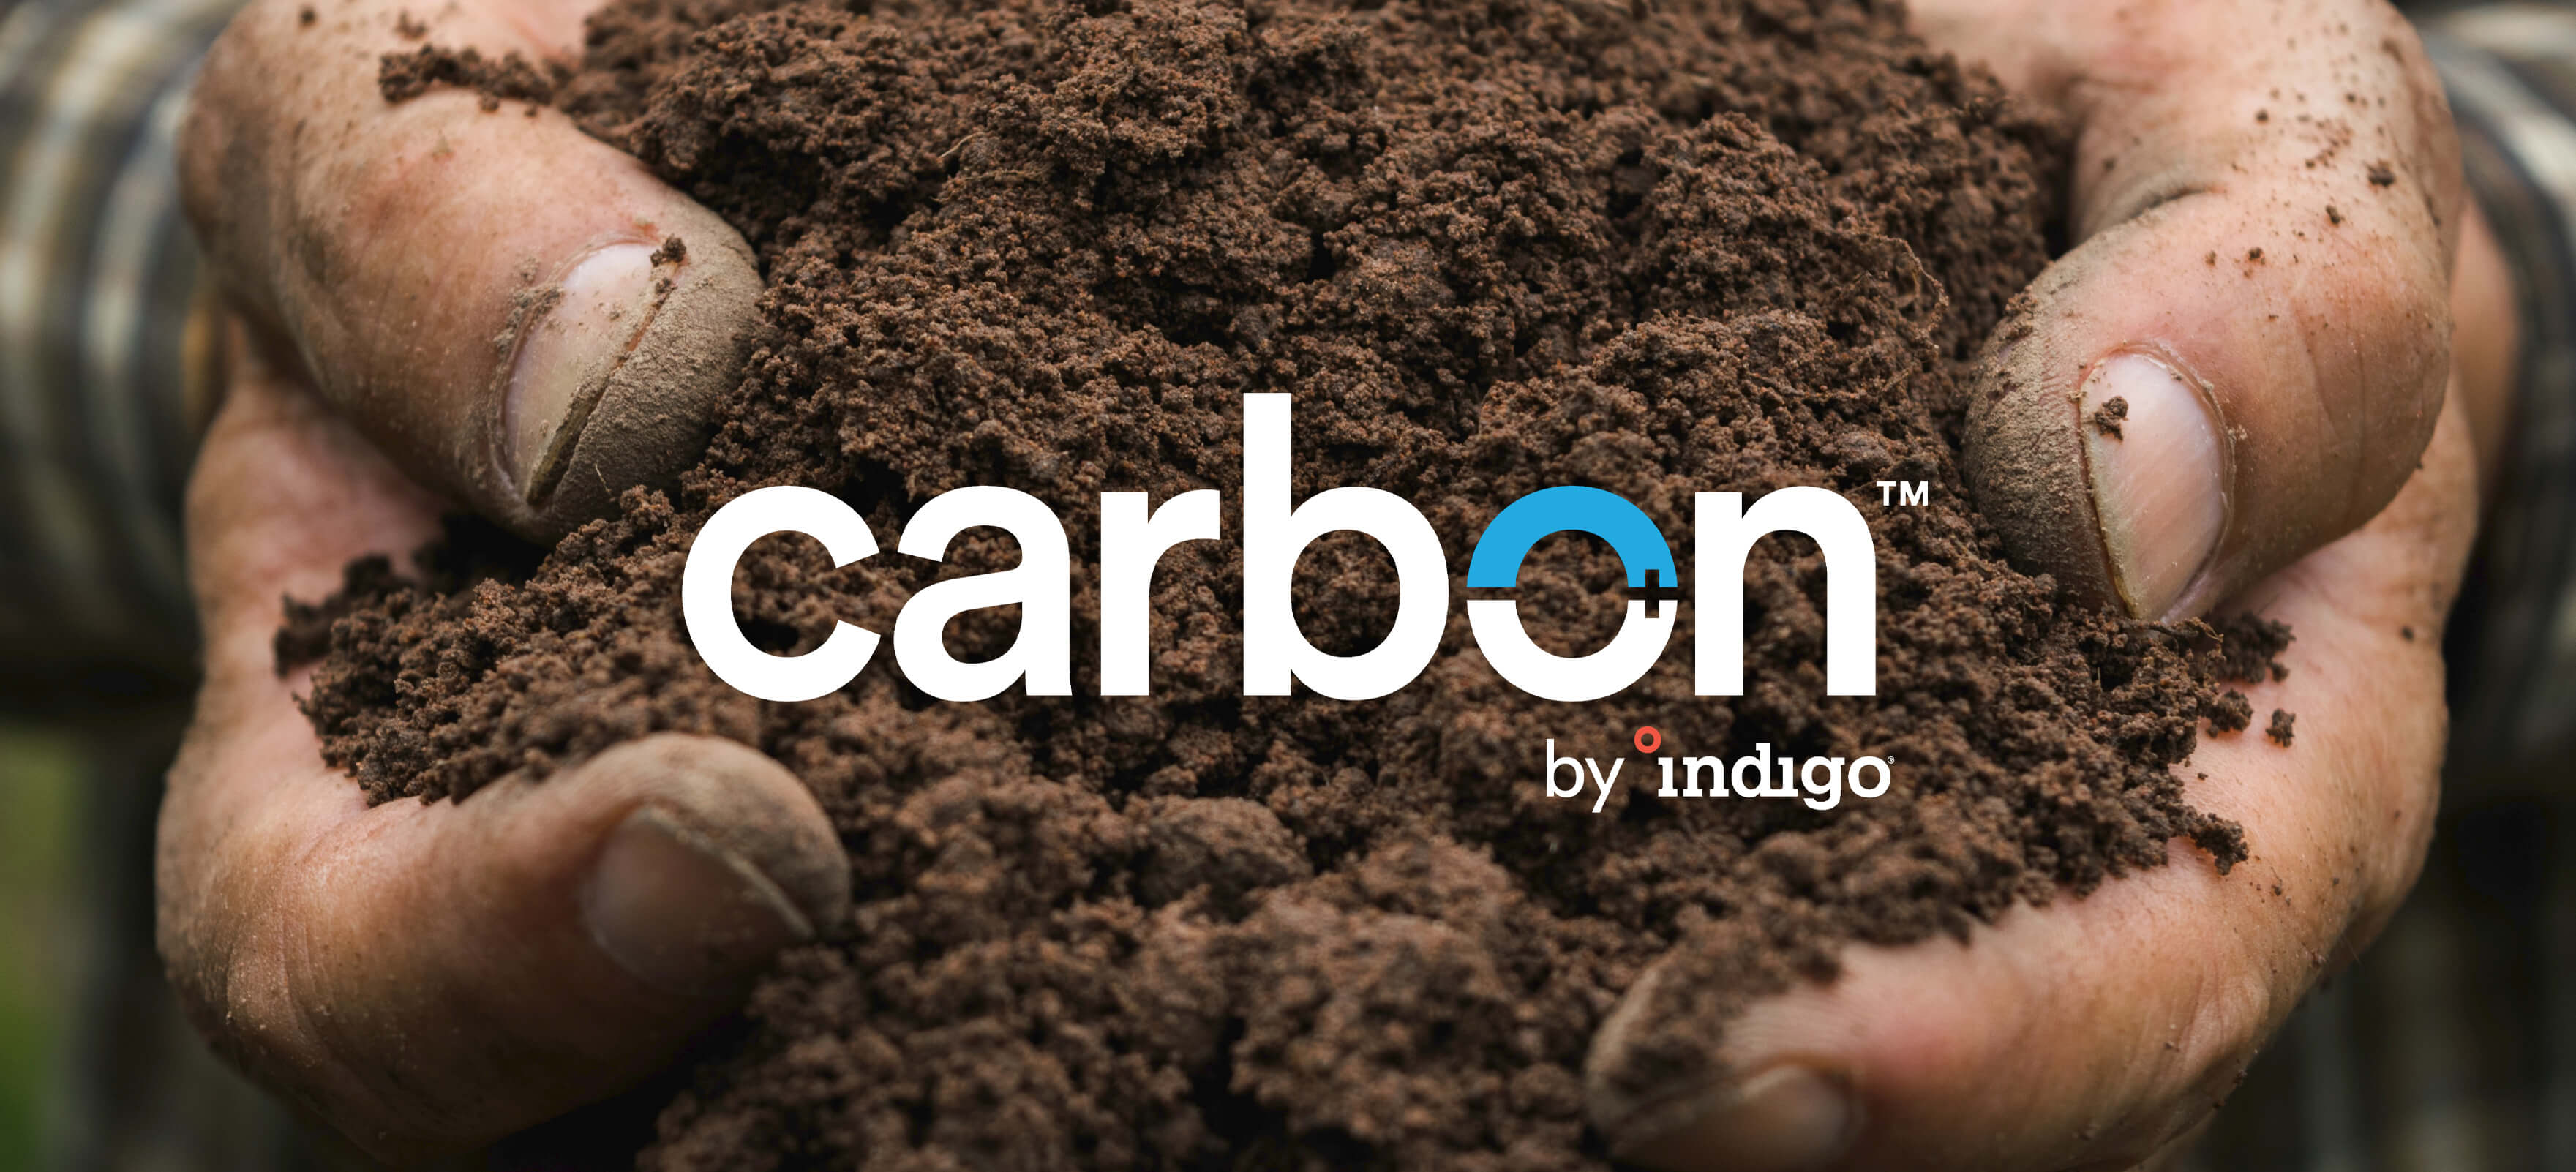 indigo carbon credits